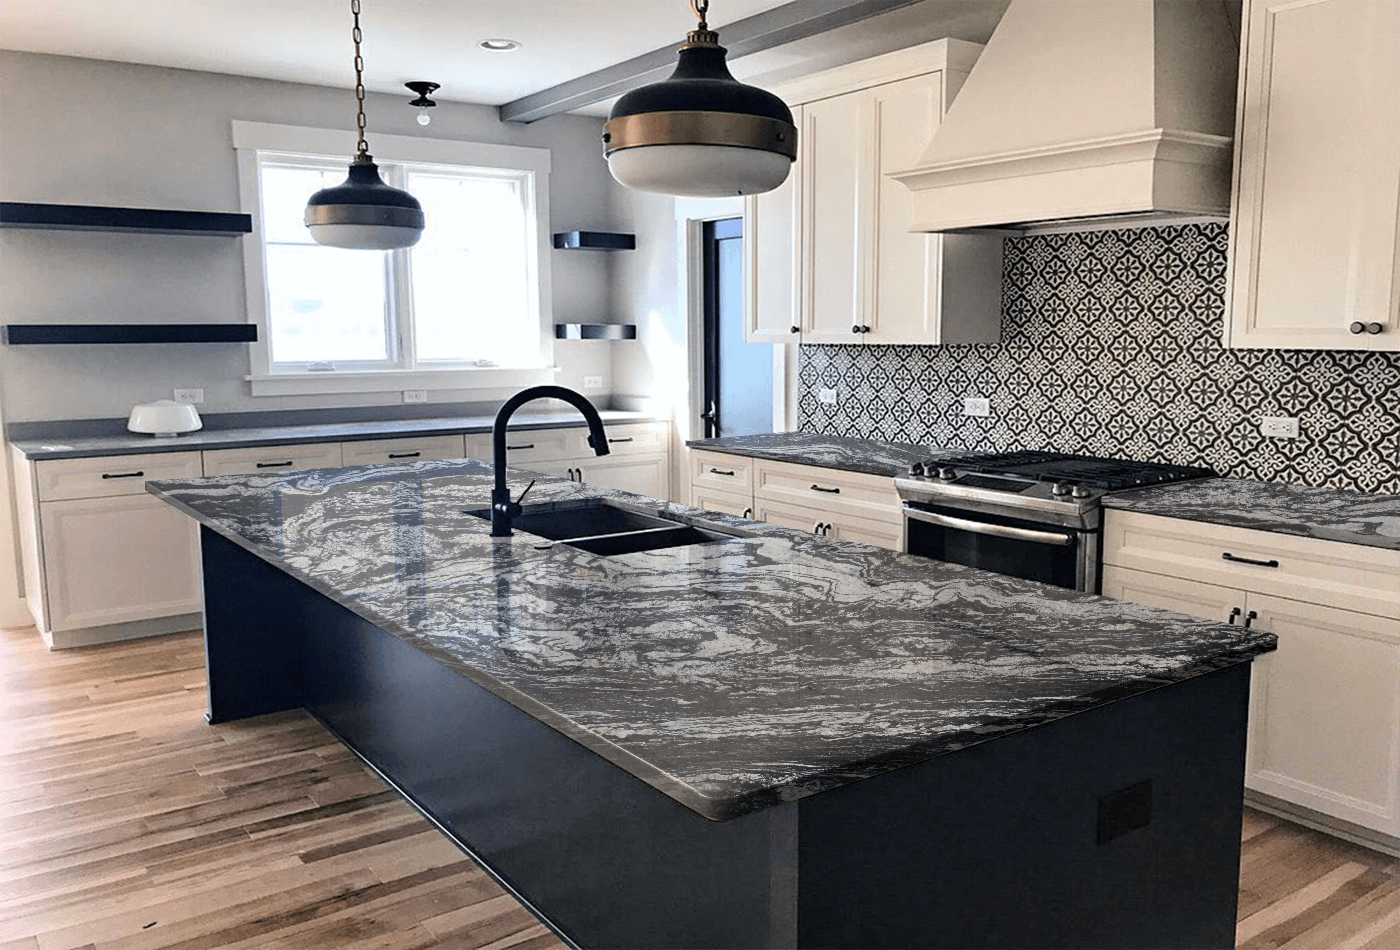 Black Zanzala Granite for your wavy kitchen